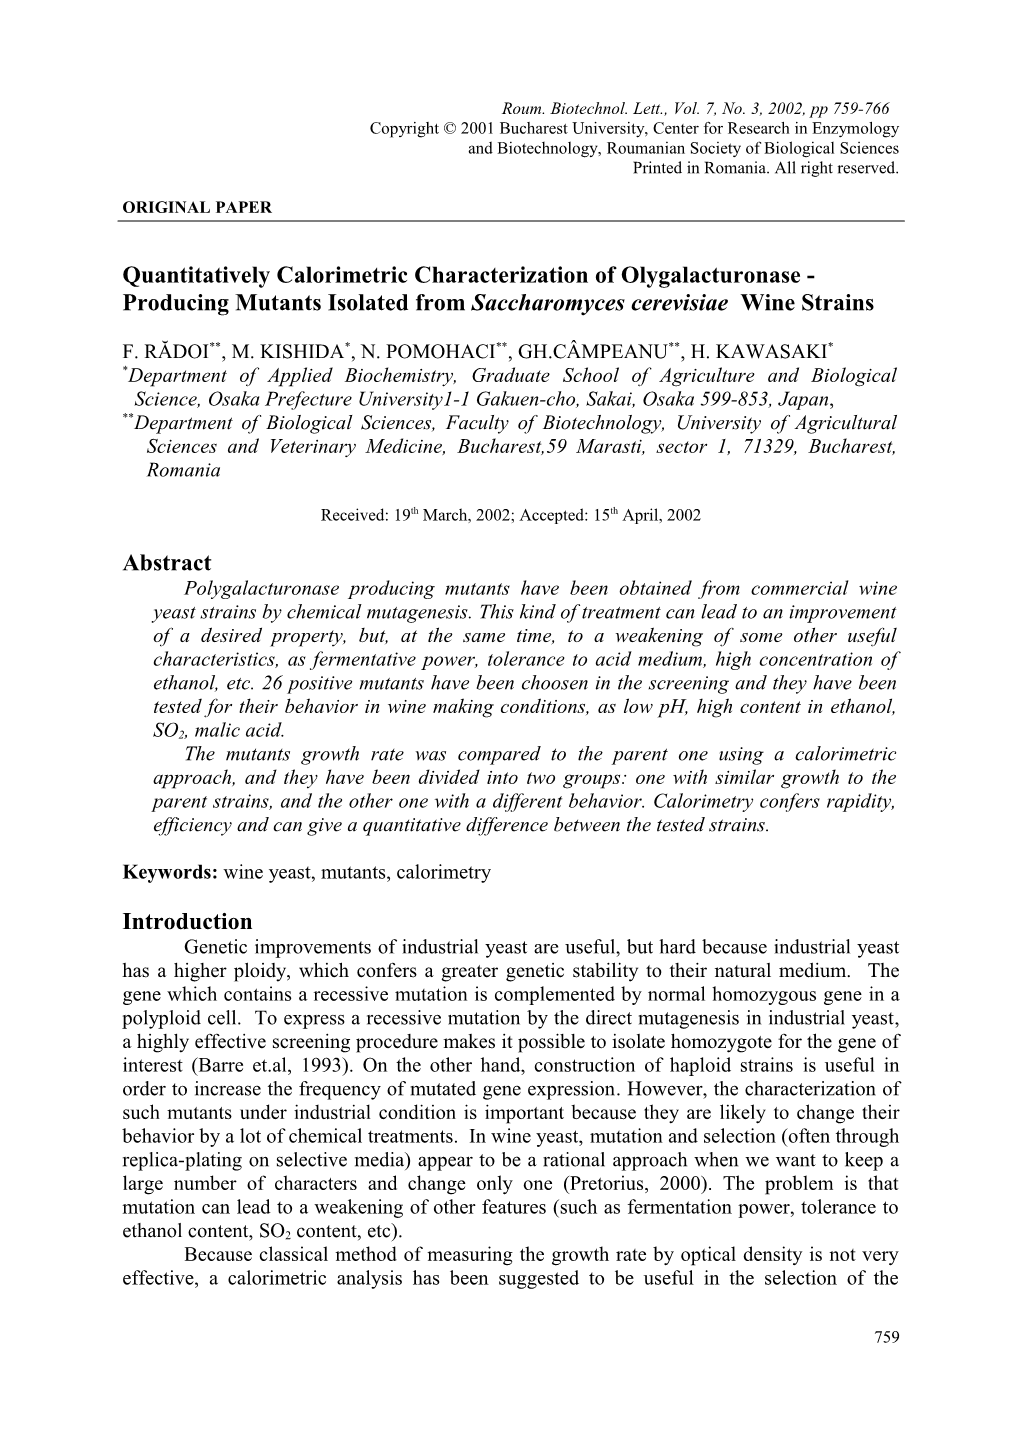 Quantitatively Calorimetric Characterization of Polygalacturonase - Producing Mutants Isolated